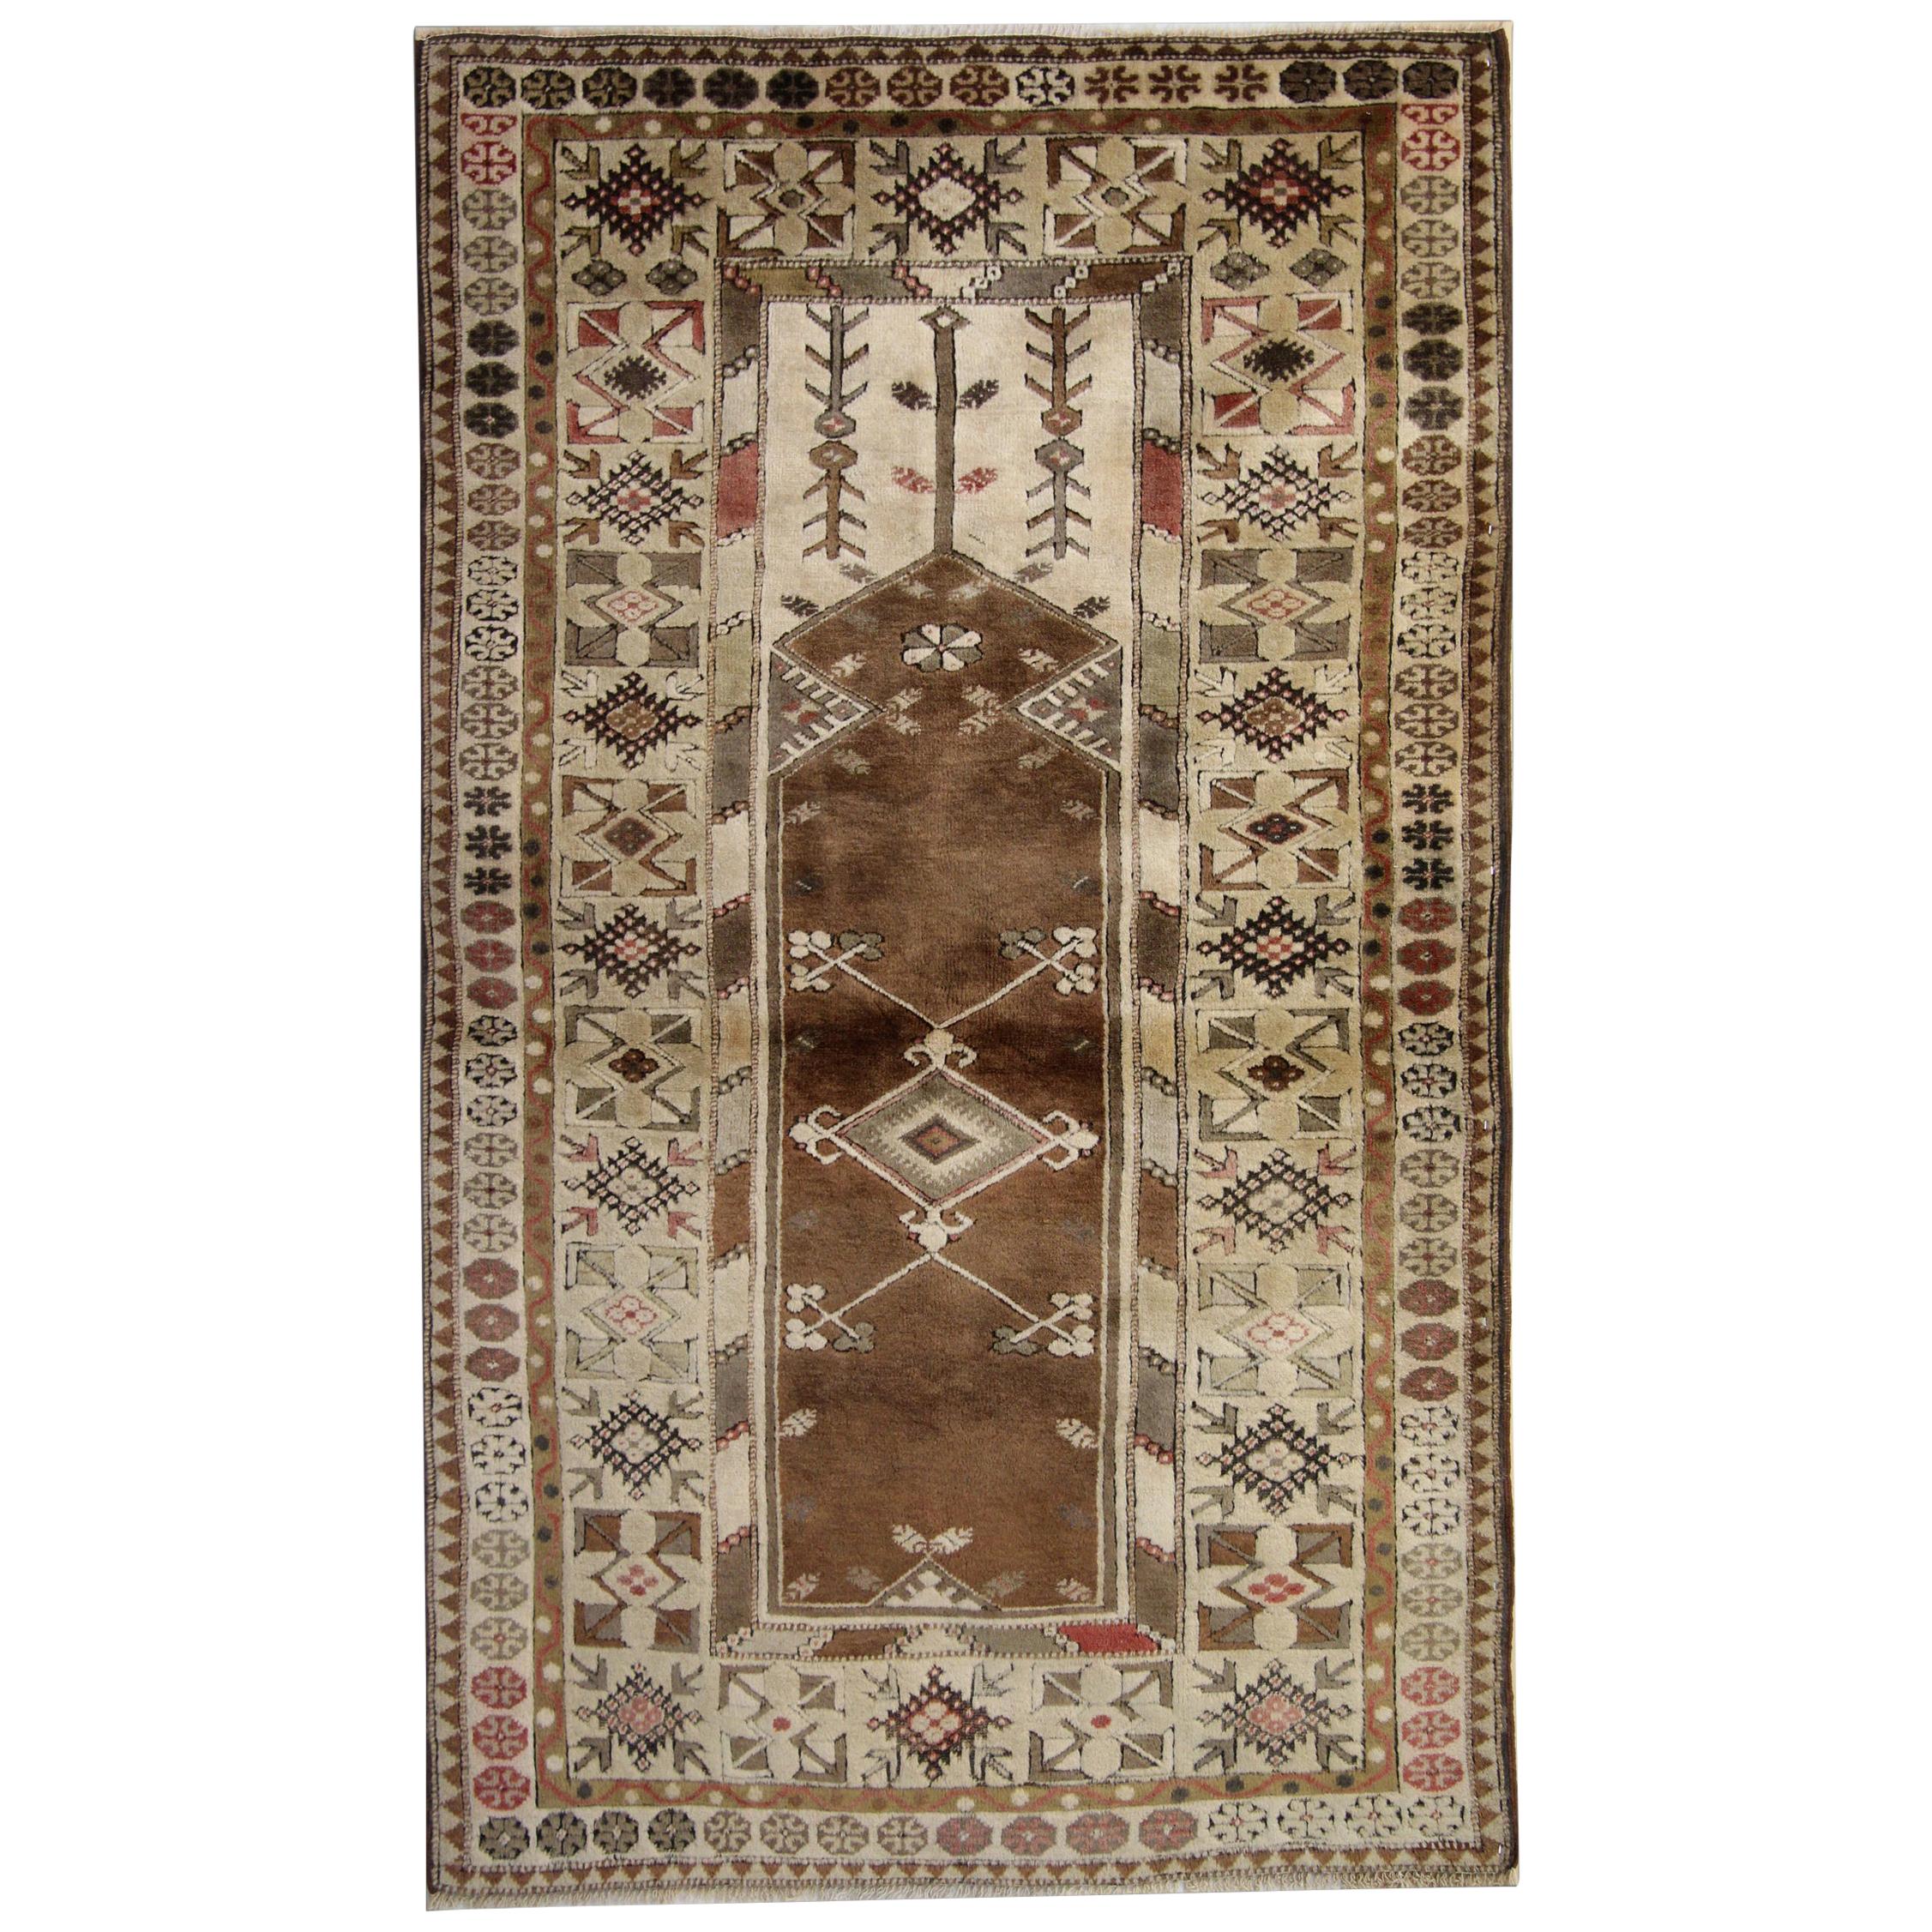 Antique Turkish Rugs, Vintage Rug Milas, Brown Rug, Handmade Carpet For Sale